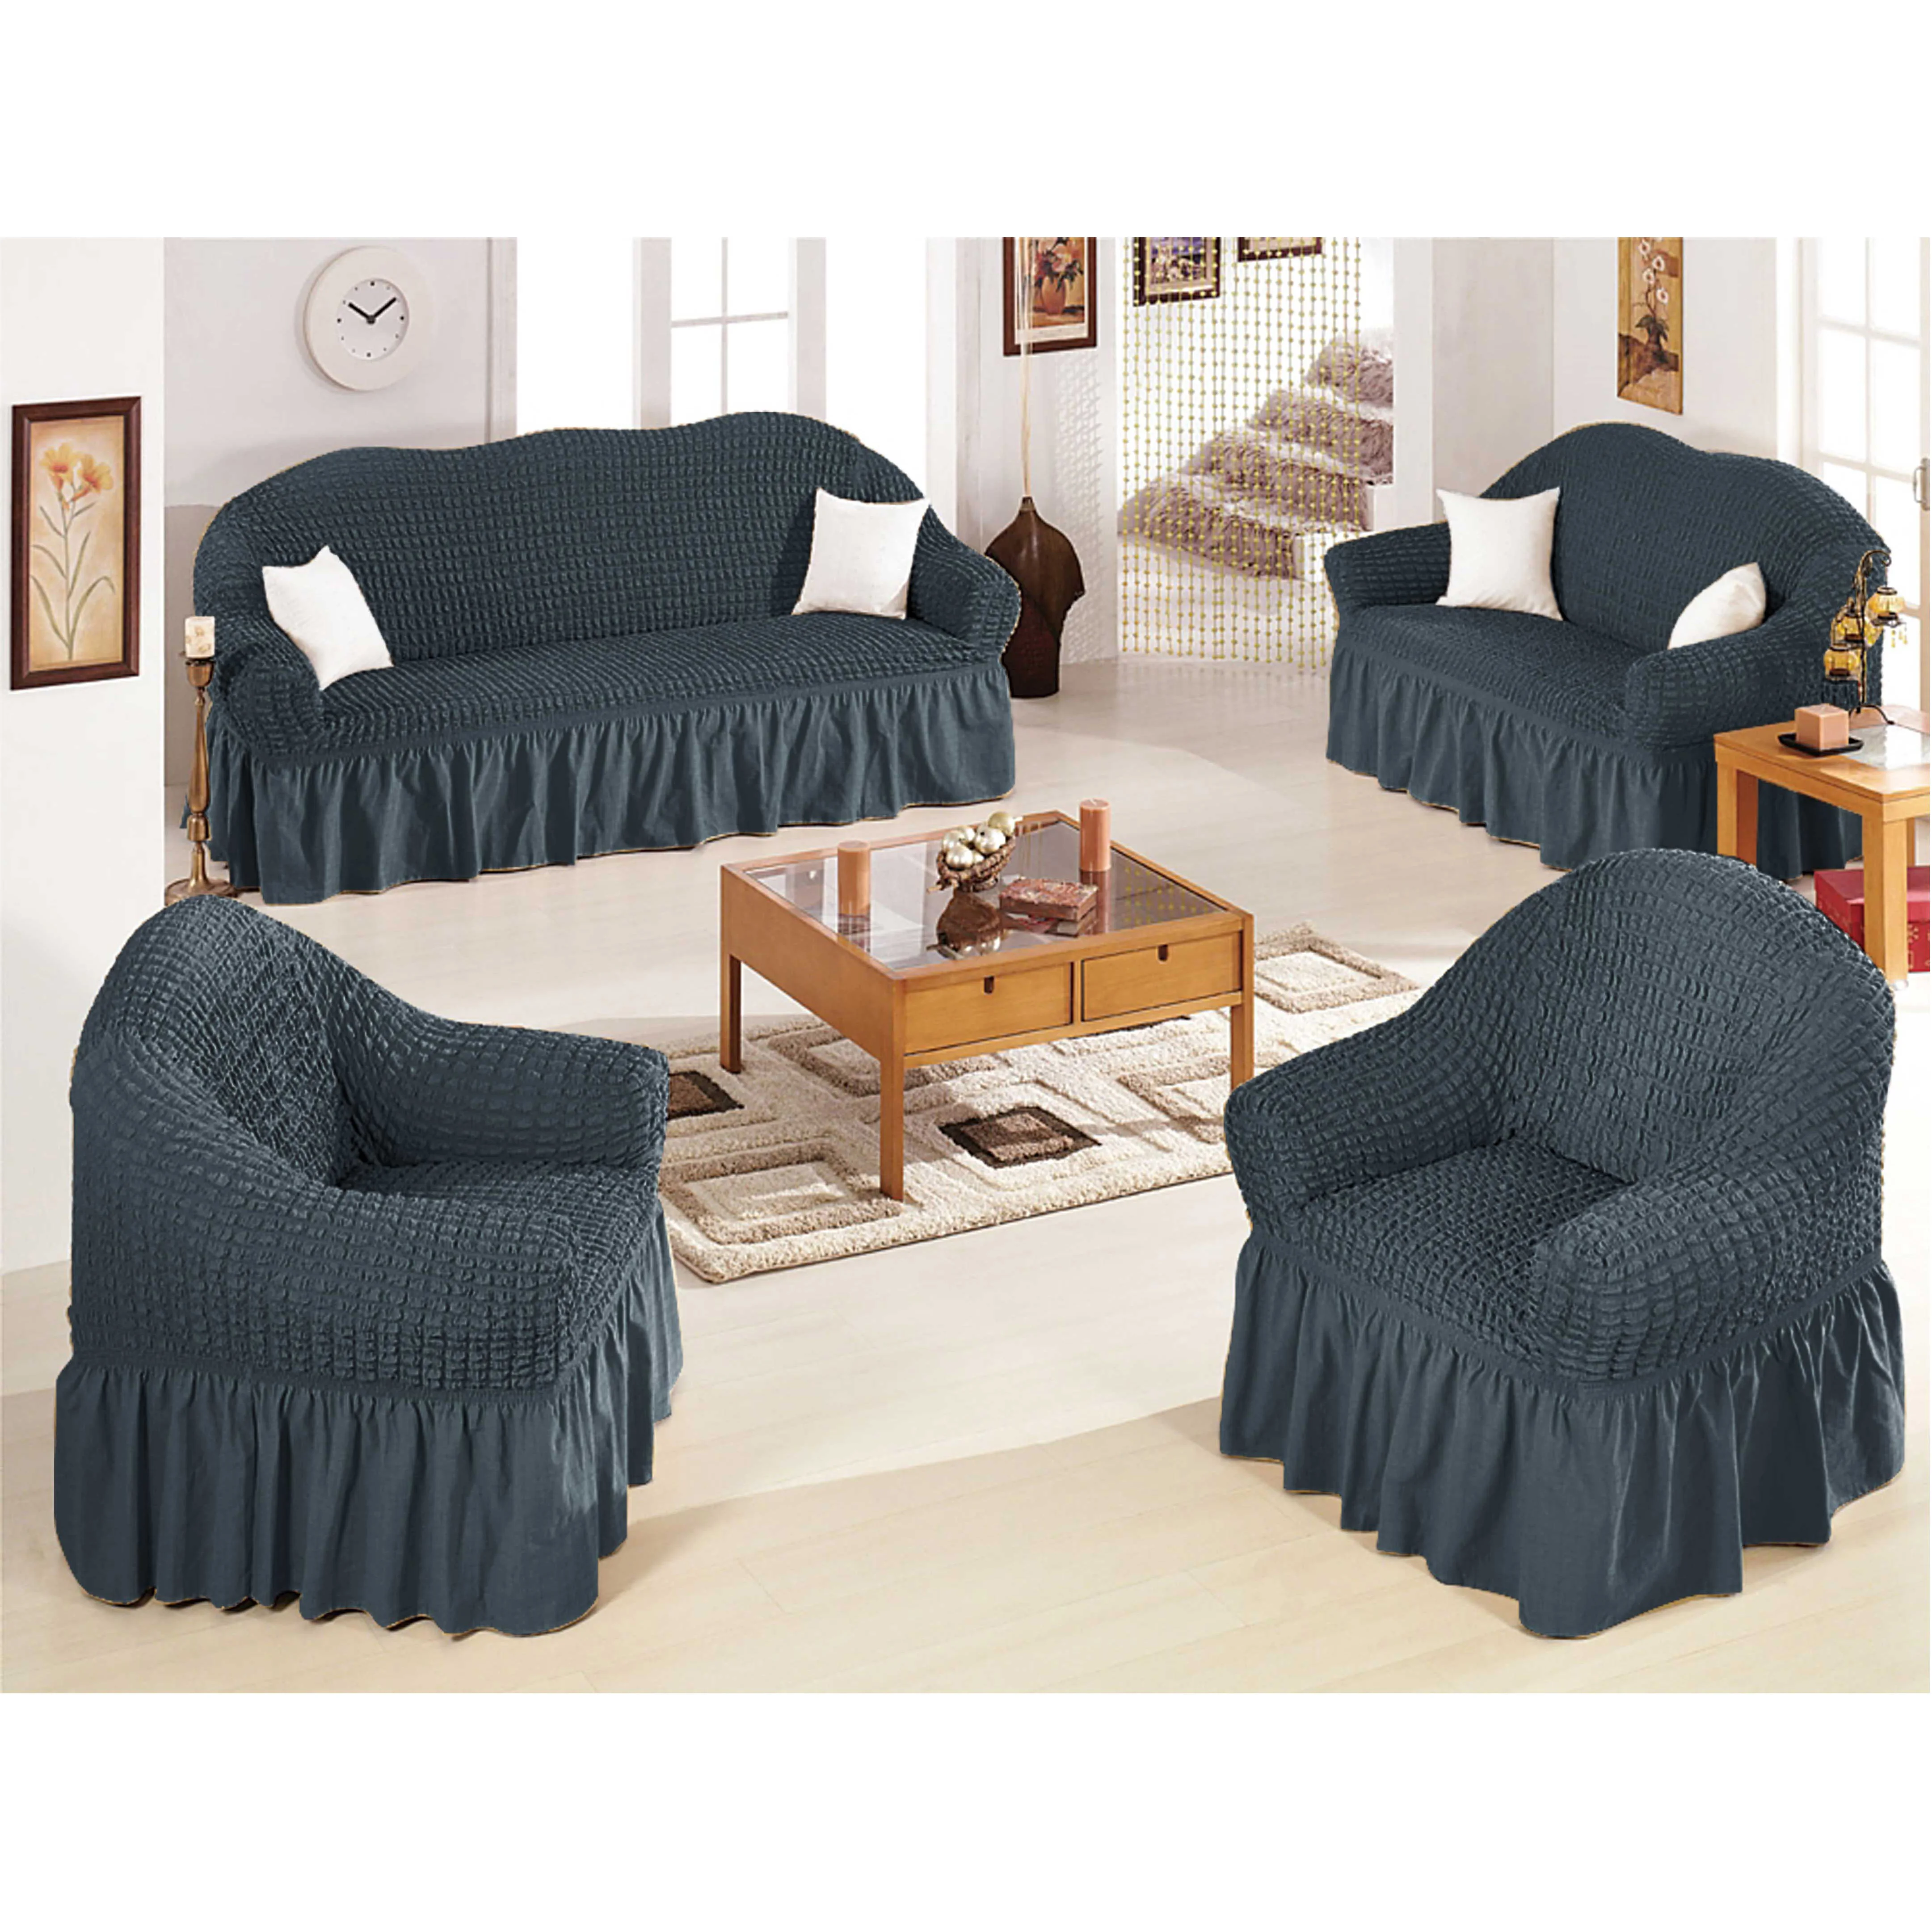 Hot selling seersucker sofa cover slipcovers elastic custom 3 seater sofa cover removable cover